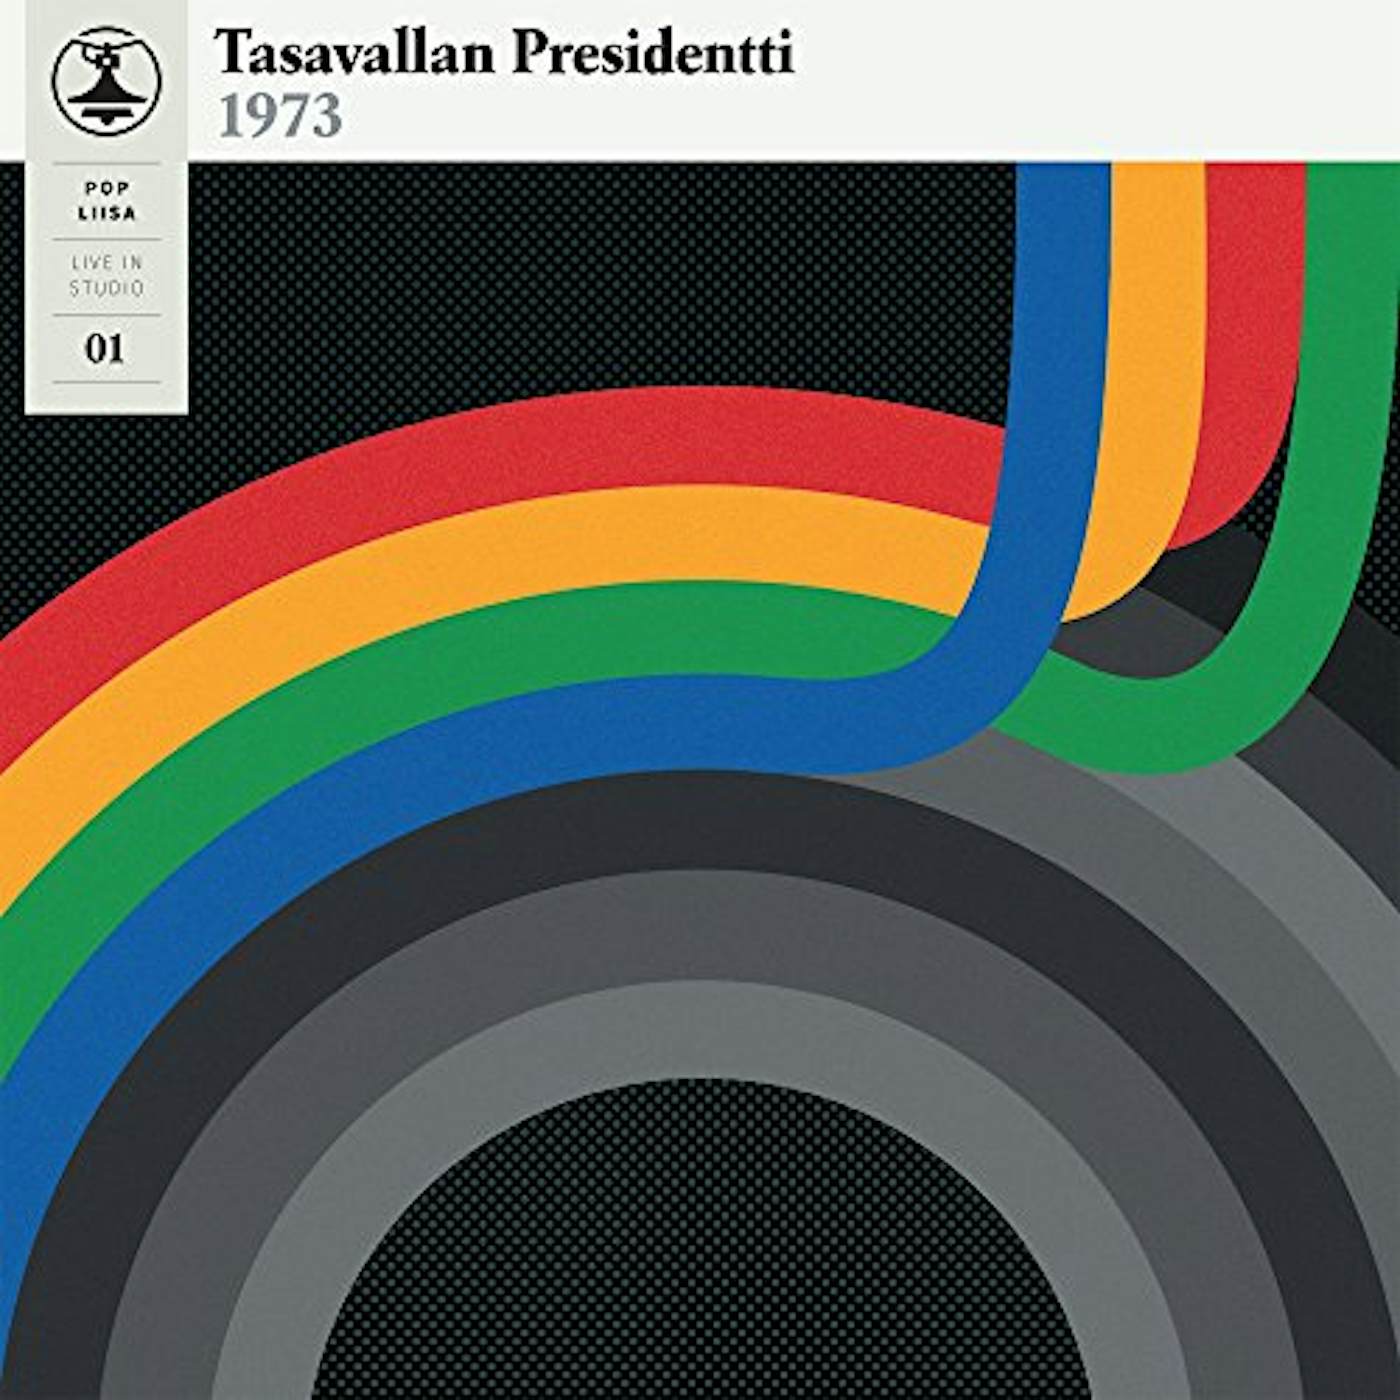 Tasavallan Presidentti POP-LIISA 1 Vinyl Record